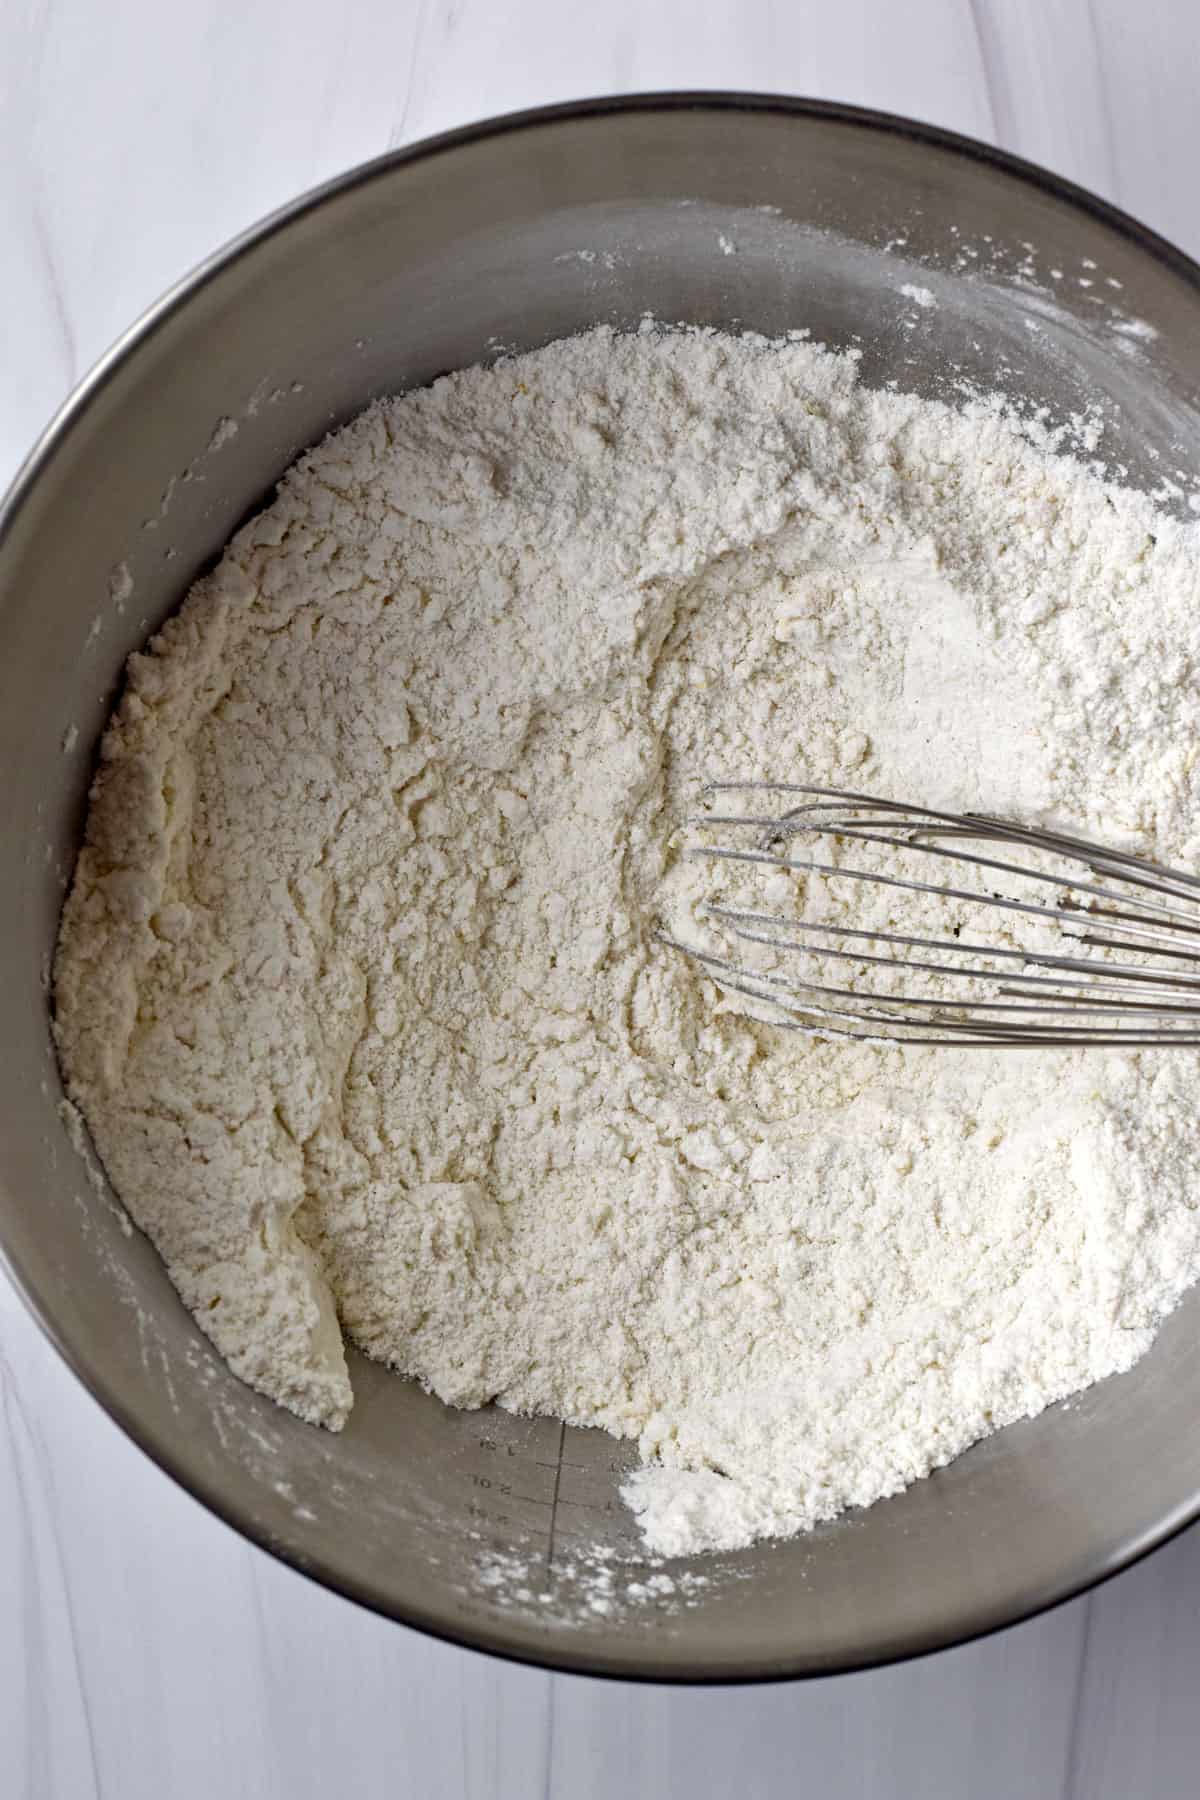 Gluten free flour blend, sugar, baking powder, salt, and orange zest whisked together in large metal mixing bowl.